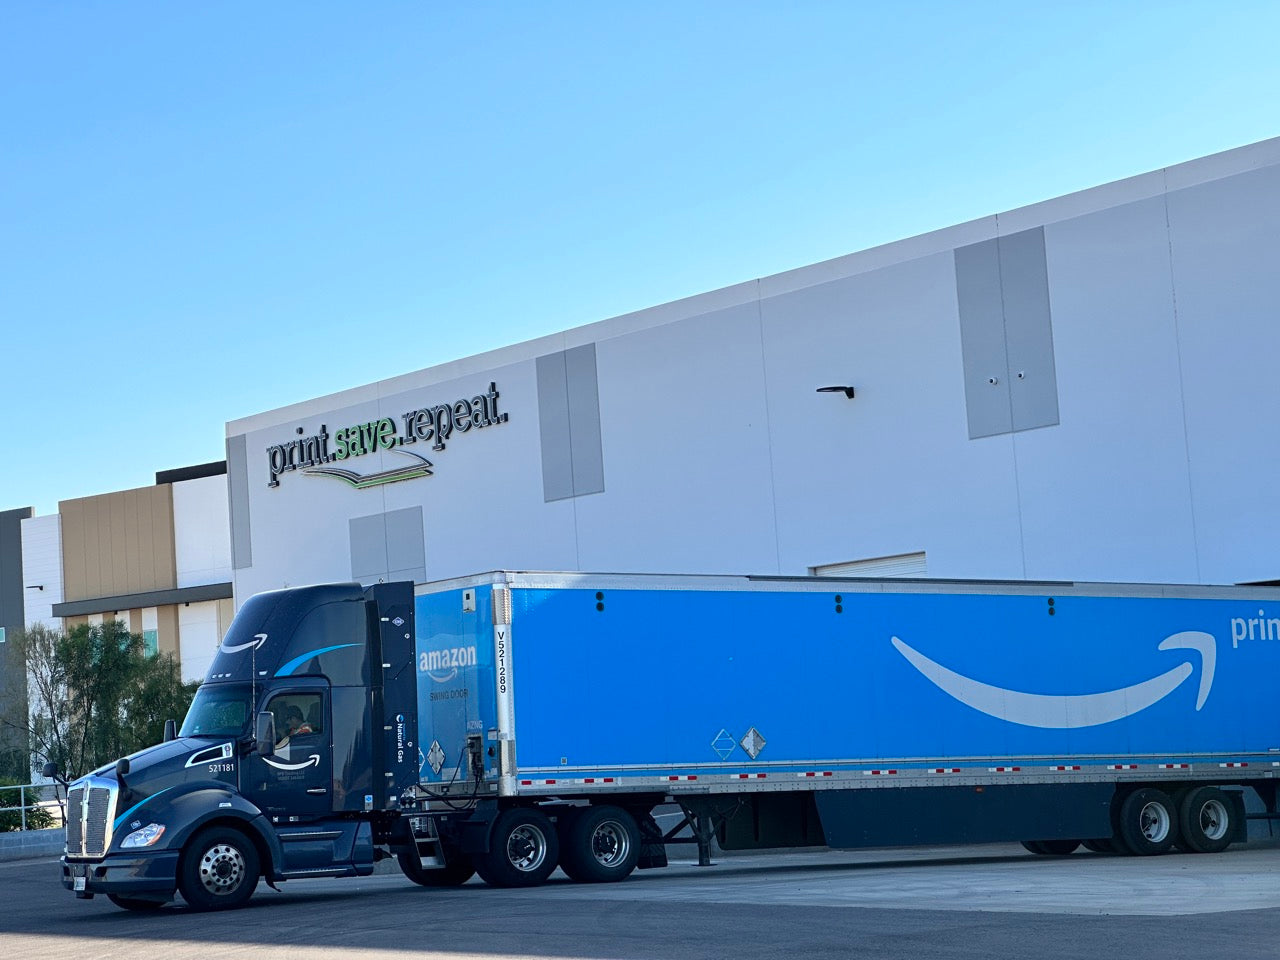 Amazon prime truck at Print.Save.Repeat.